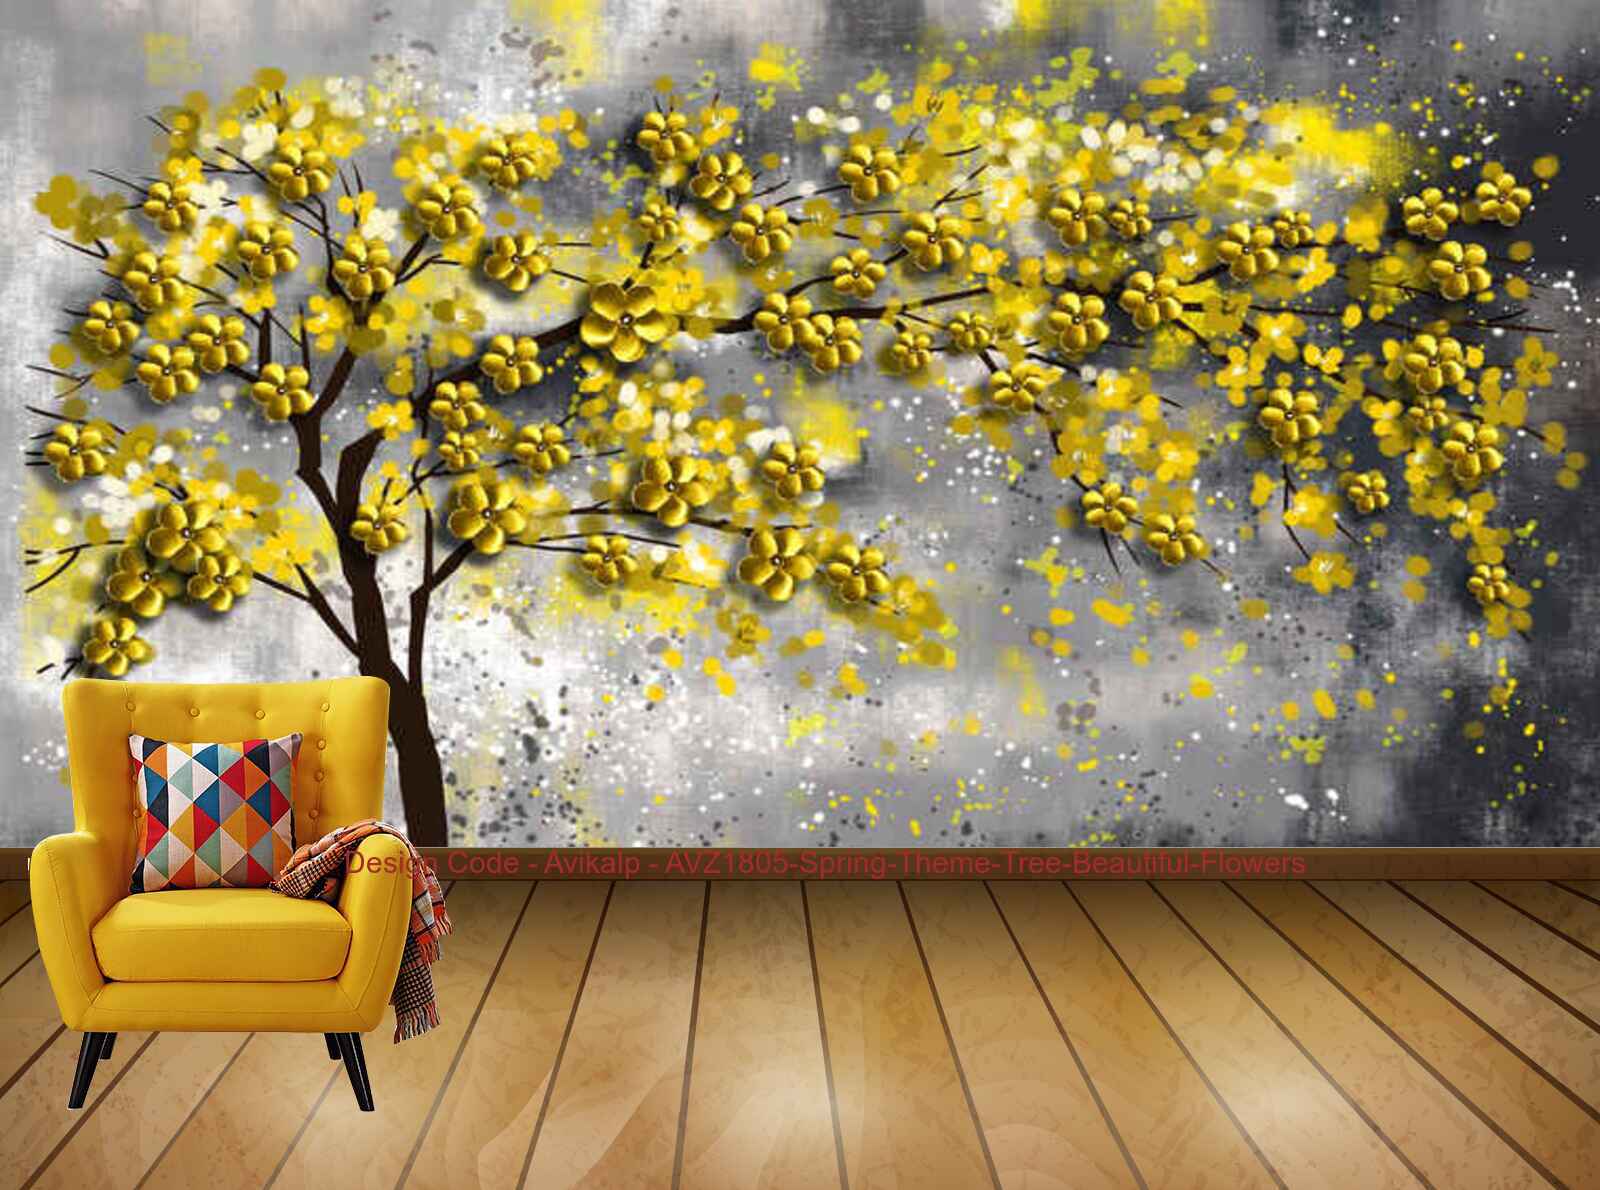 Avikalp Exclusive AVZ1805 Spring Theme Tree Beautiful Flowers HD 3D Wa –  Avikalp International - 3D Wallpapers